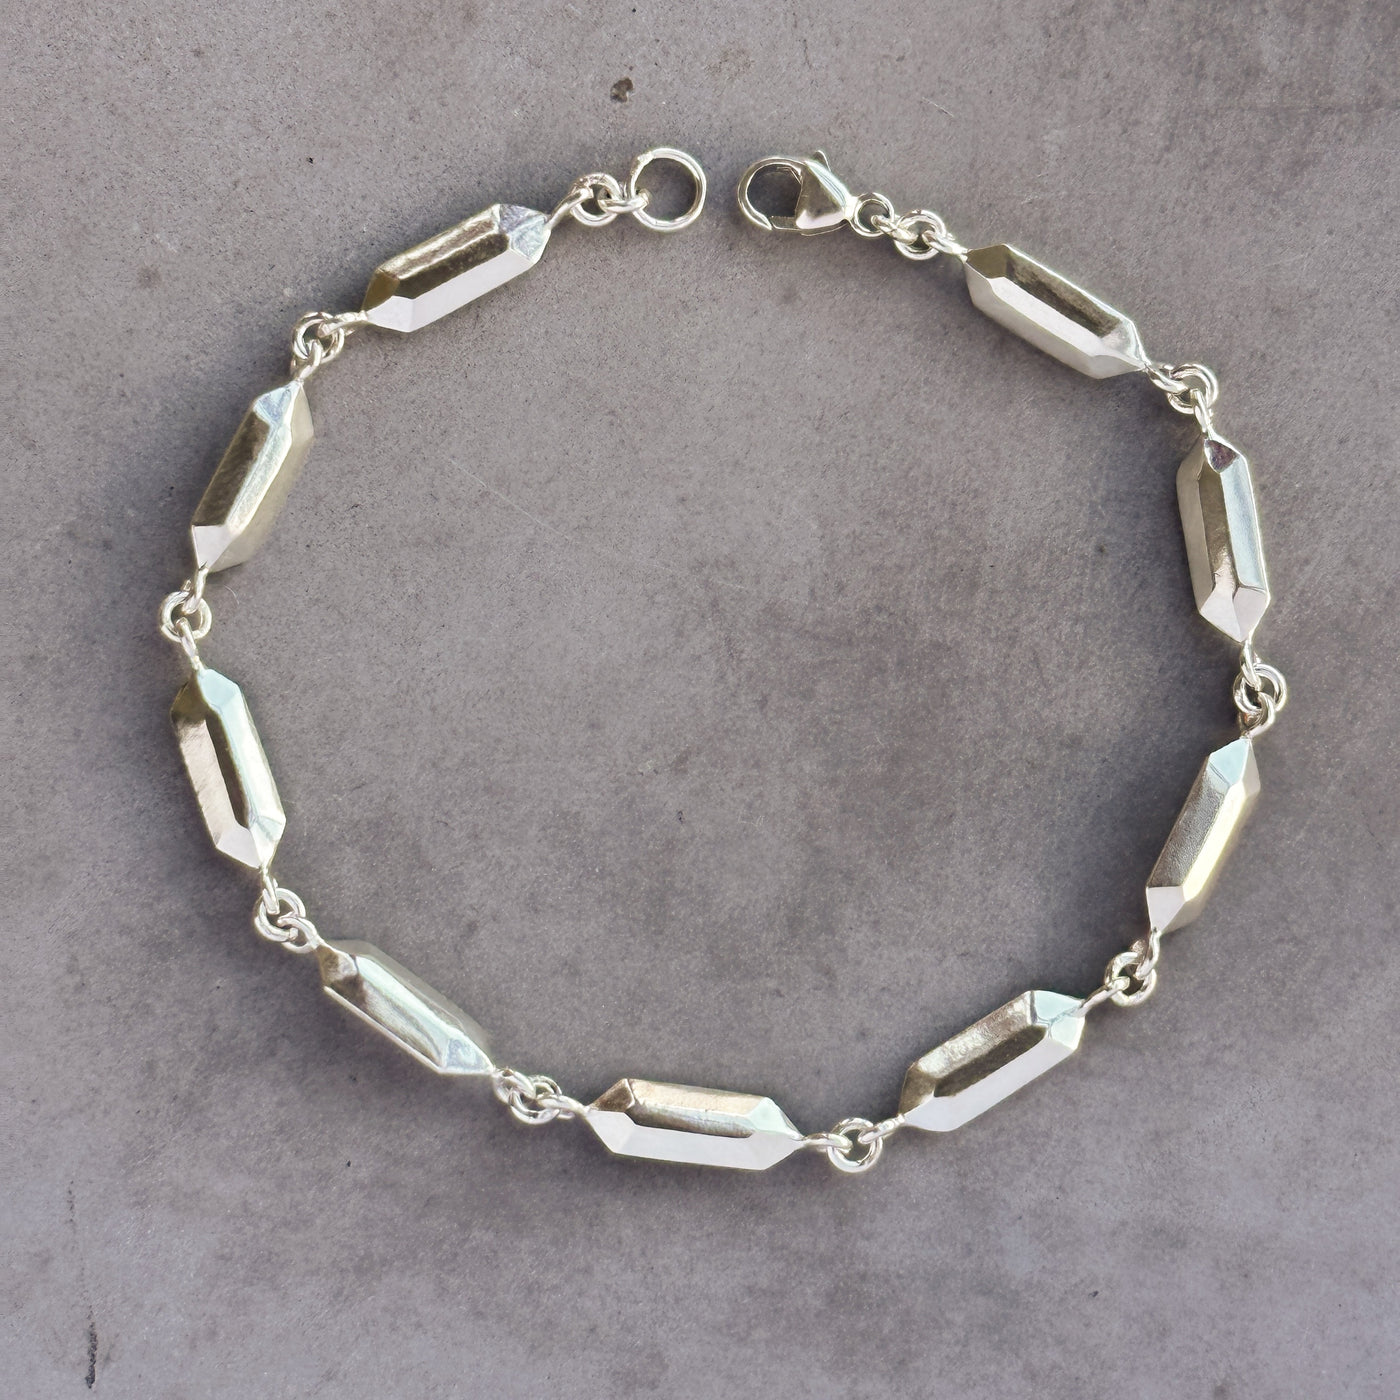 Fragment Link Bracelet in Silver on neutral gray background